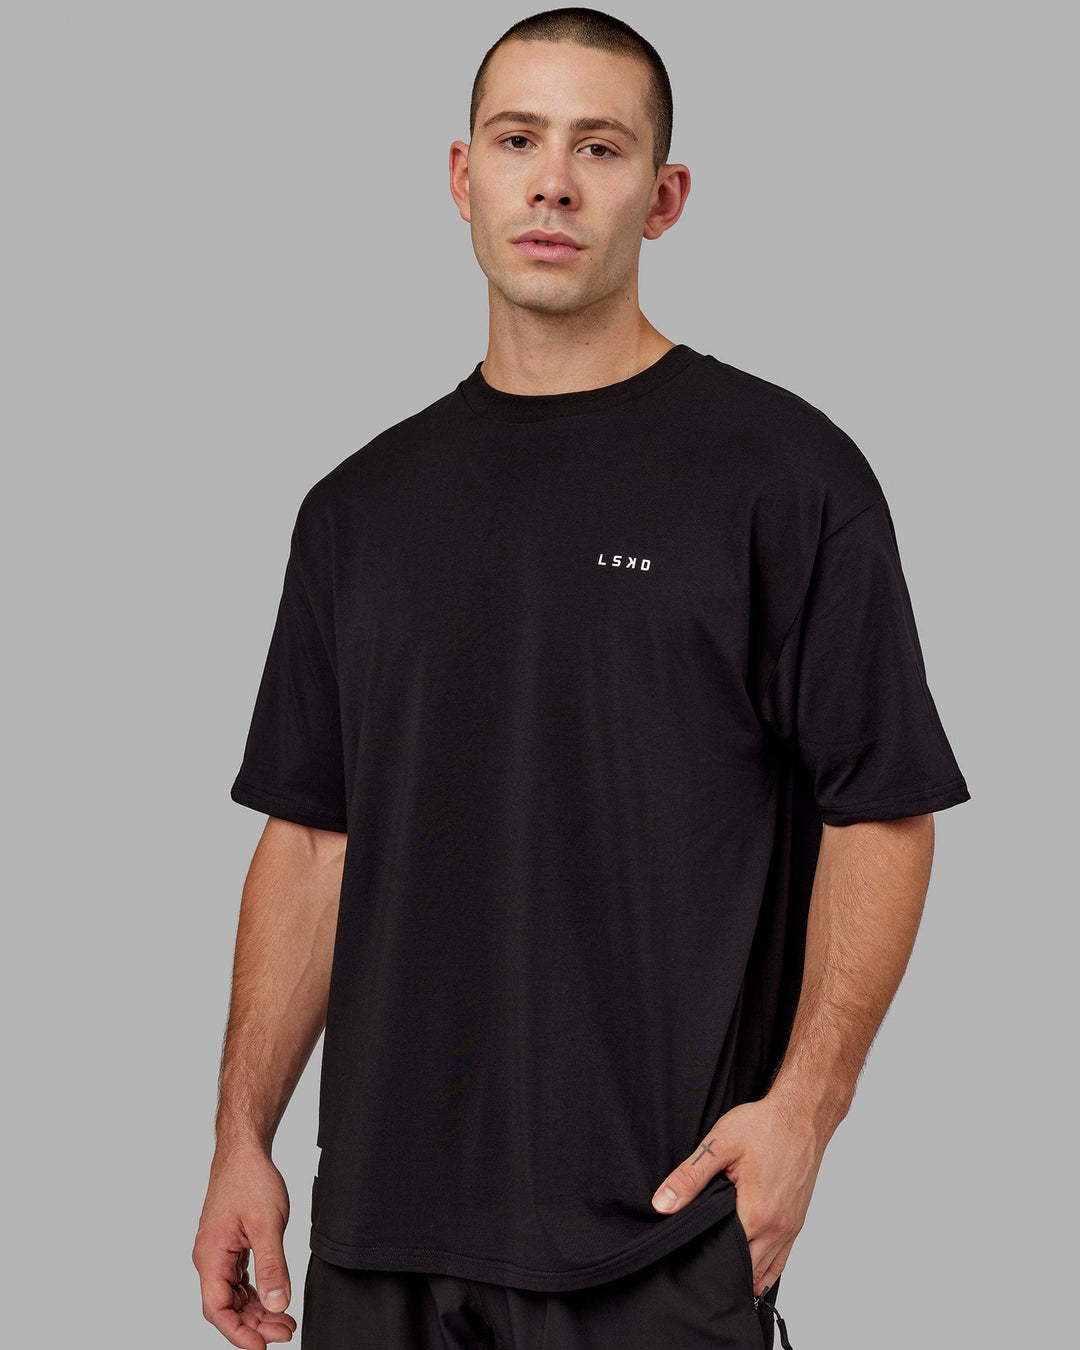 Man wearing Unisex VS6 FLXCotton Tee Oversize - Black-White